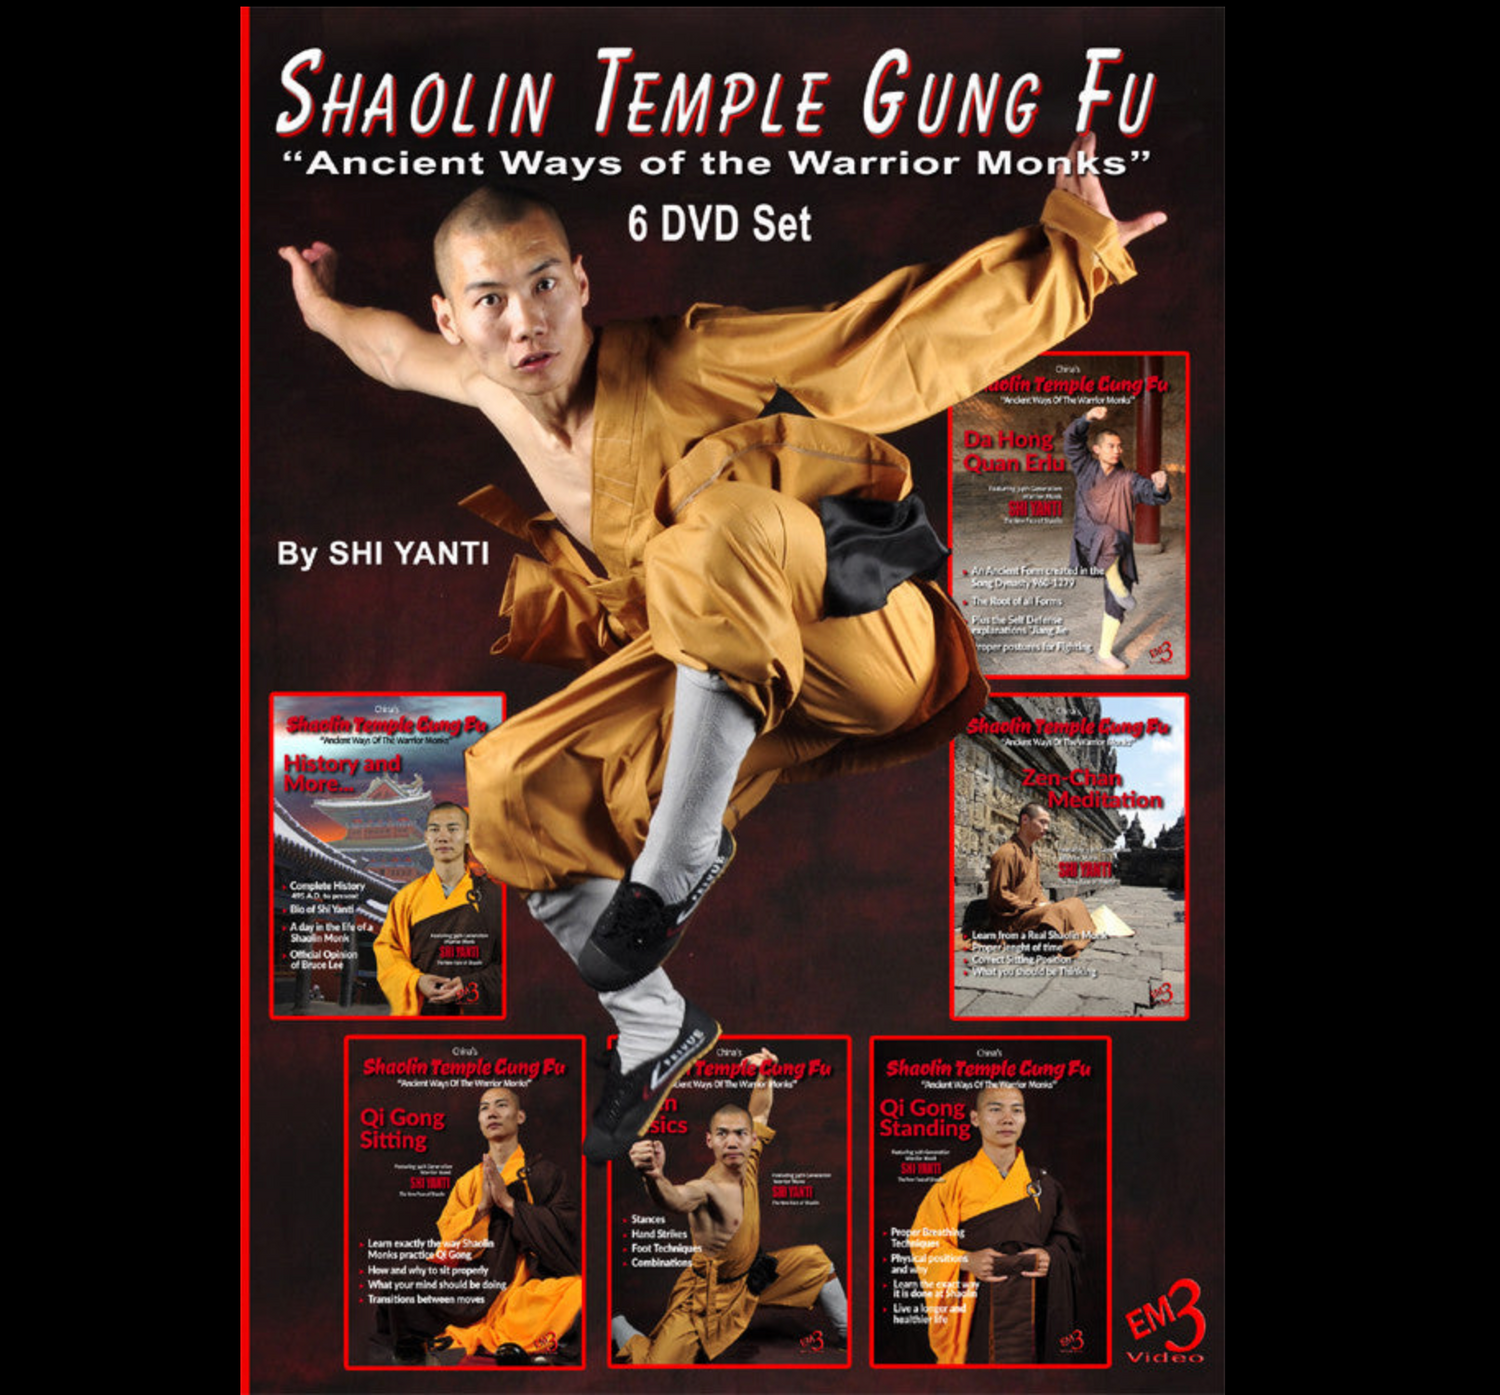 Serie Shaolin Temple Gung Fu 6 Vol de Shi Yanti (bajo demanda)